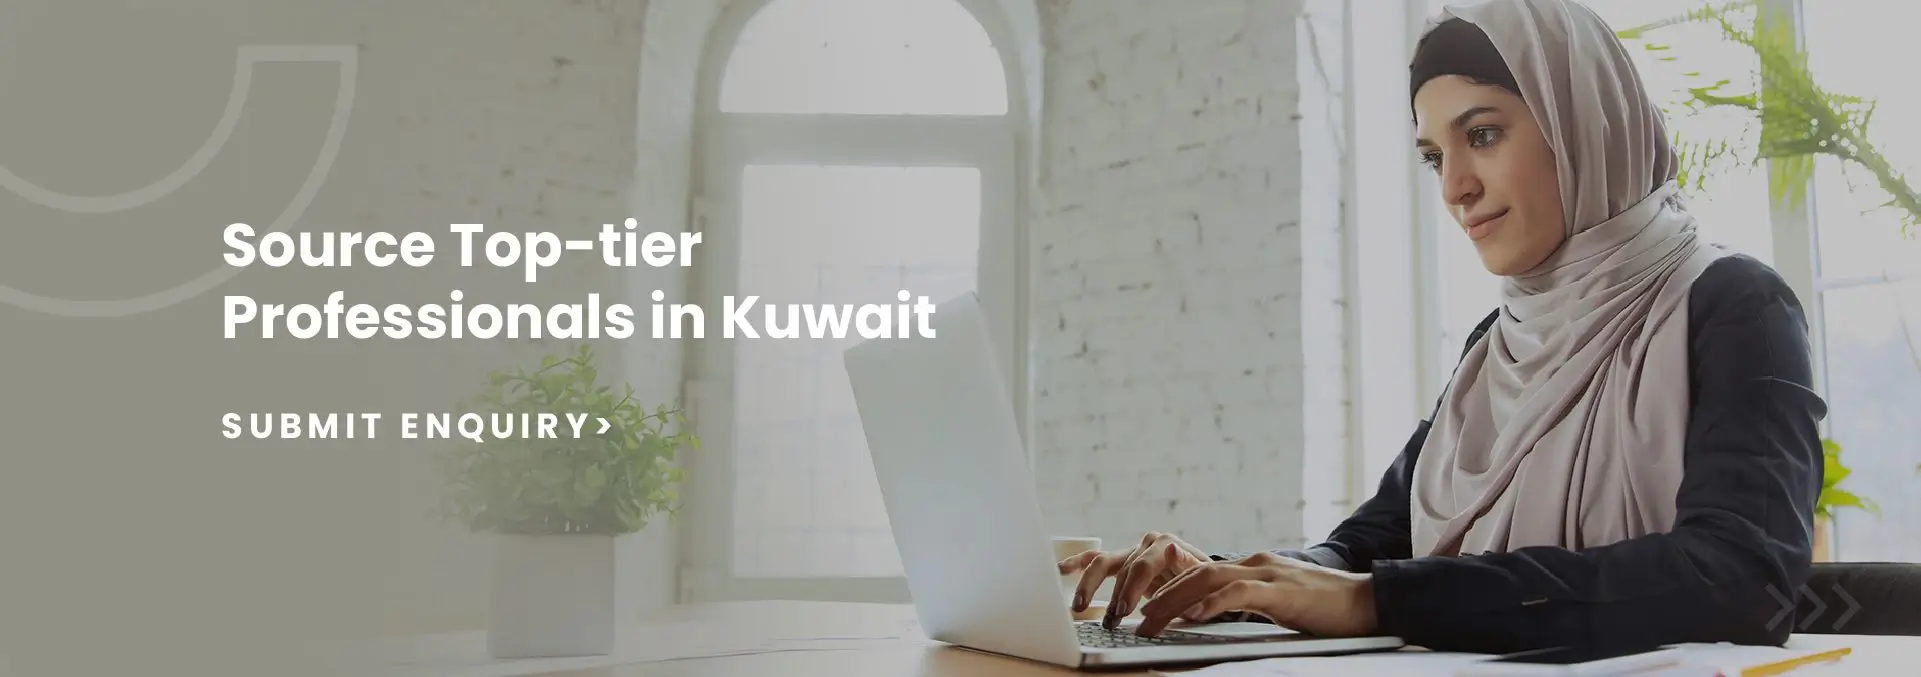 Source Top-tier Professional in Kuwait